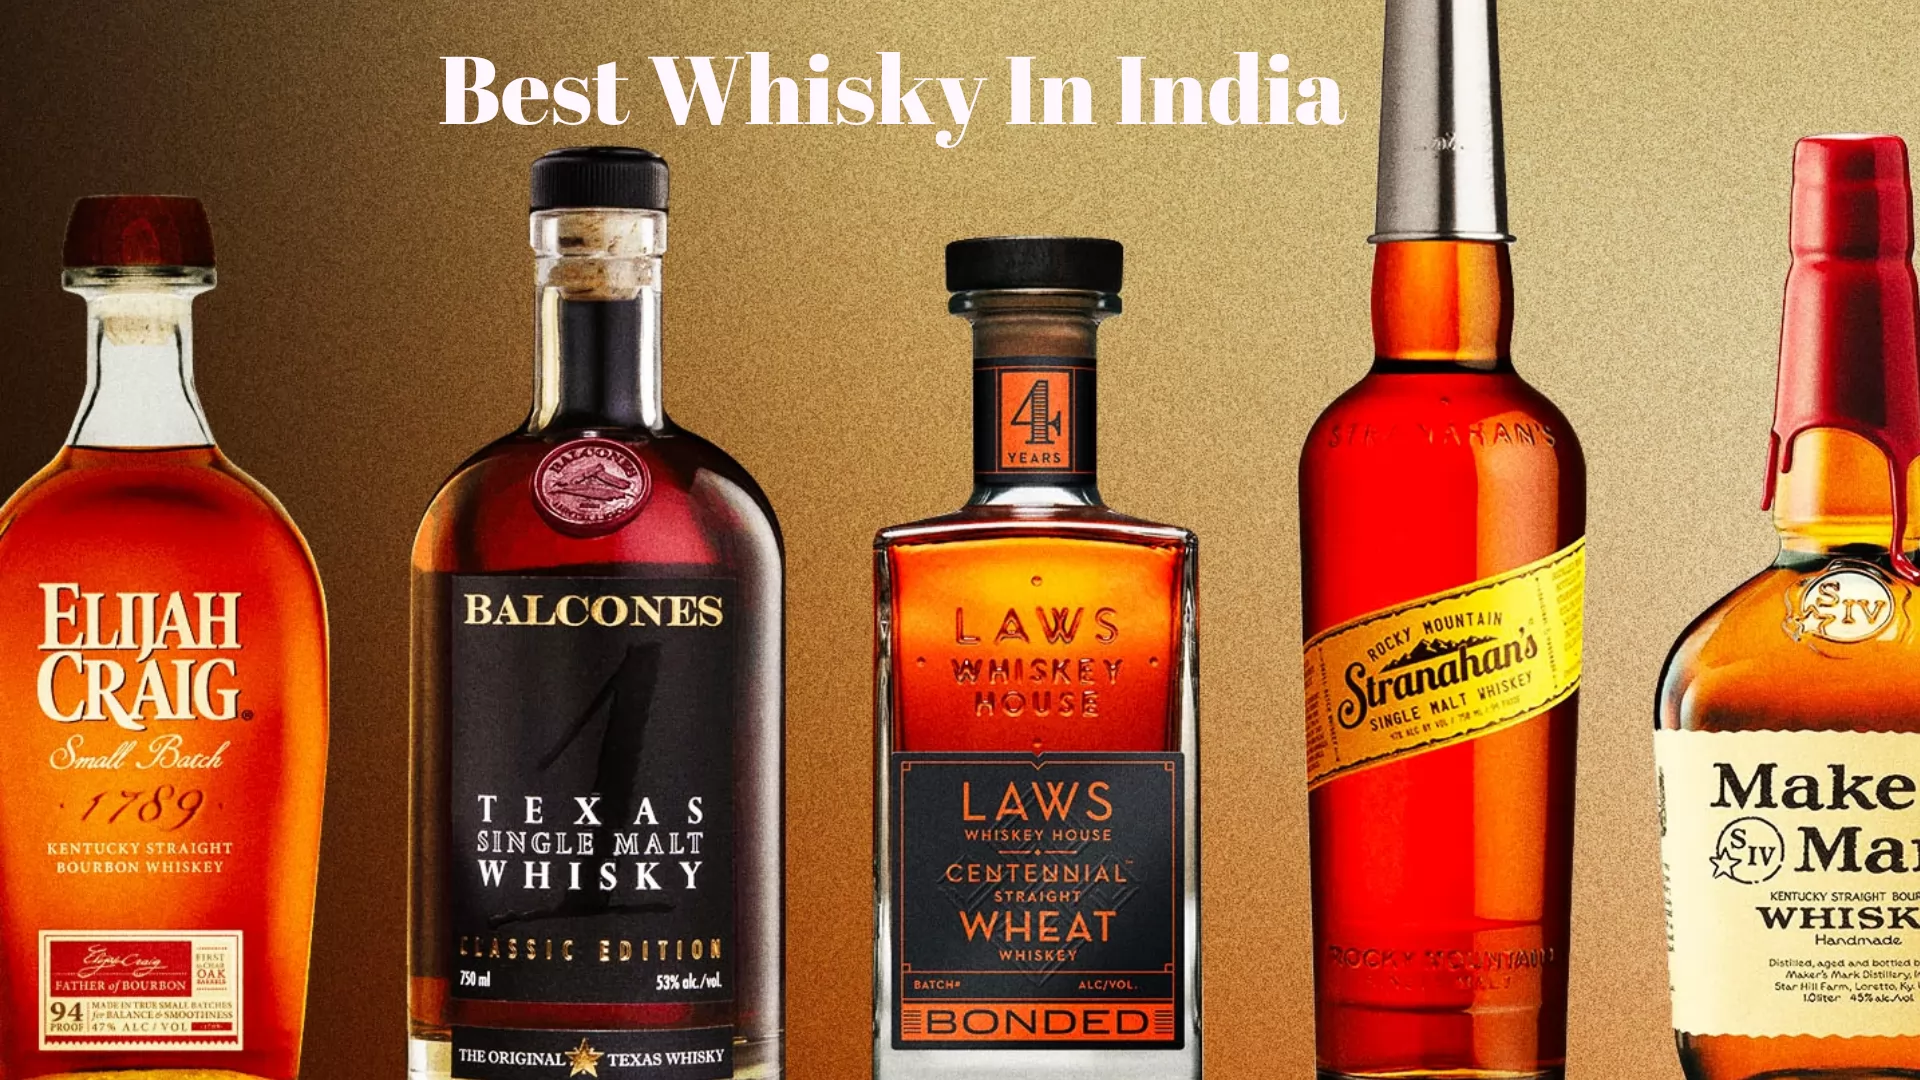 Best Whisky in India Below 1500